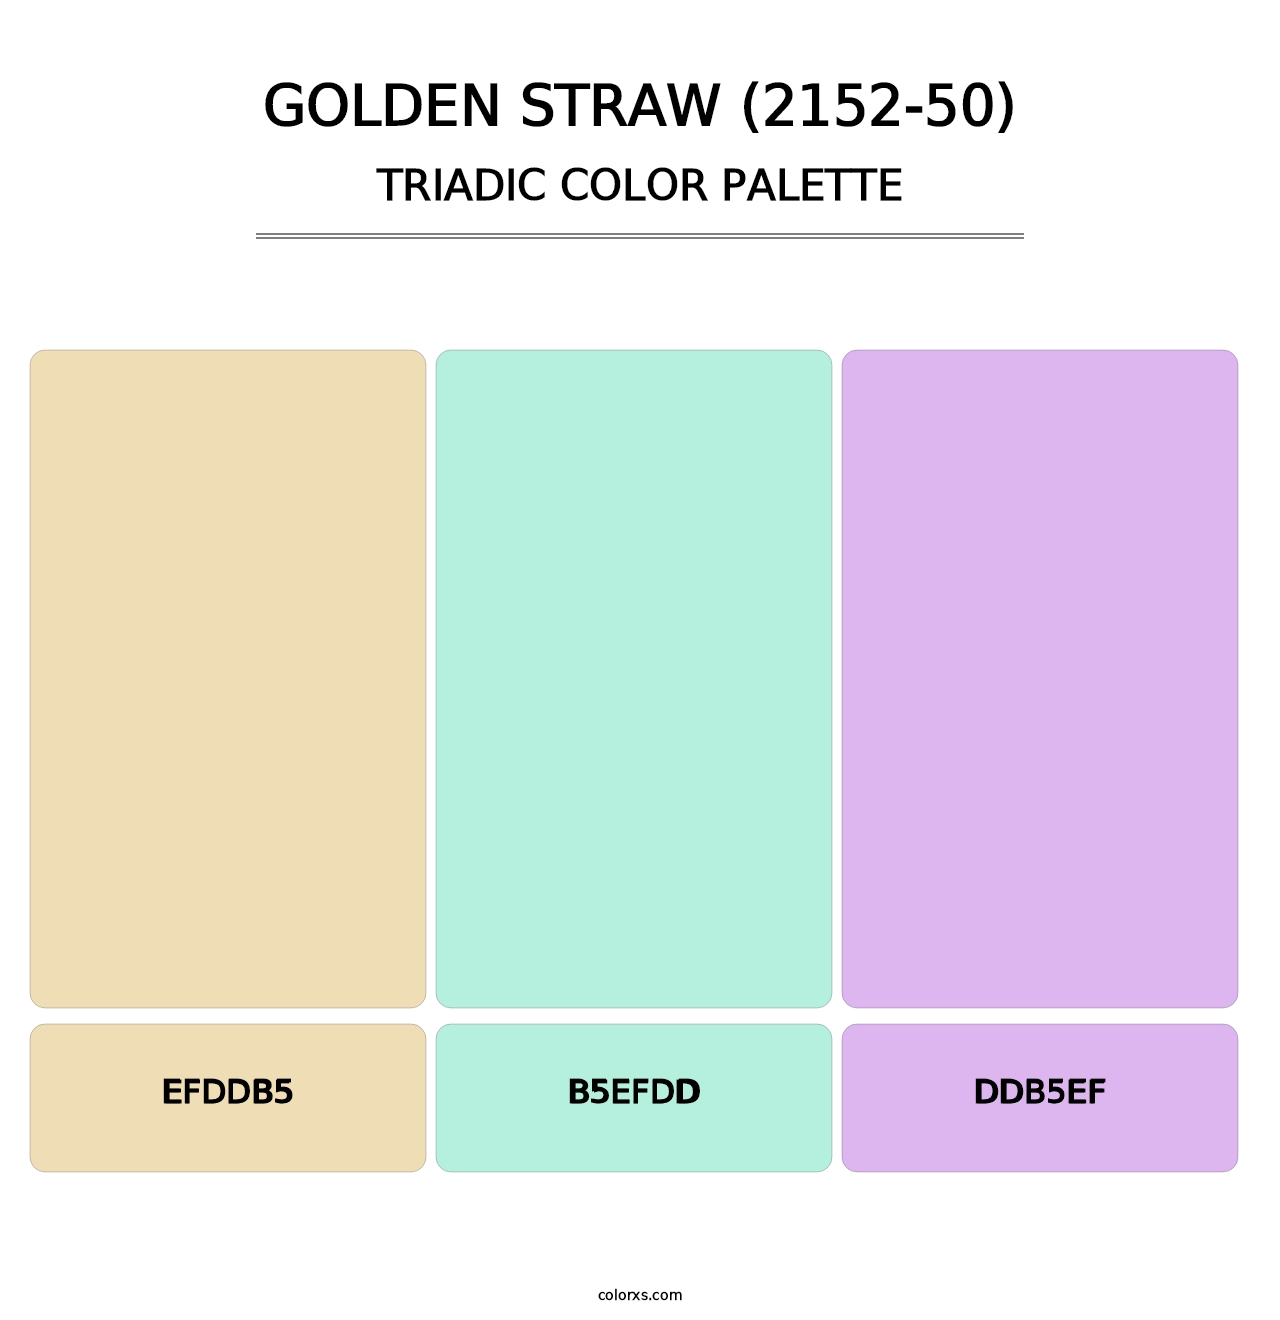 Golden Straw (2152-50) - Triadic Color Palette